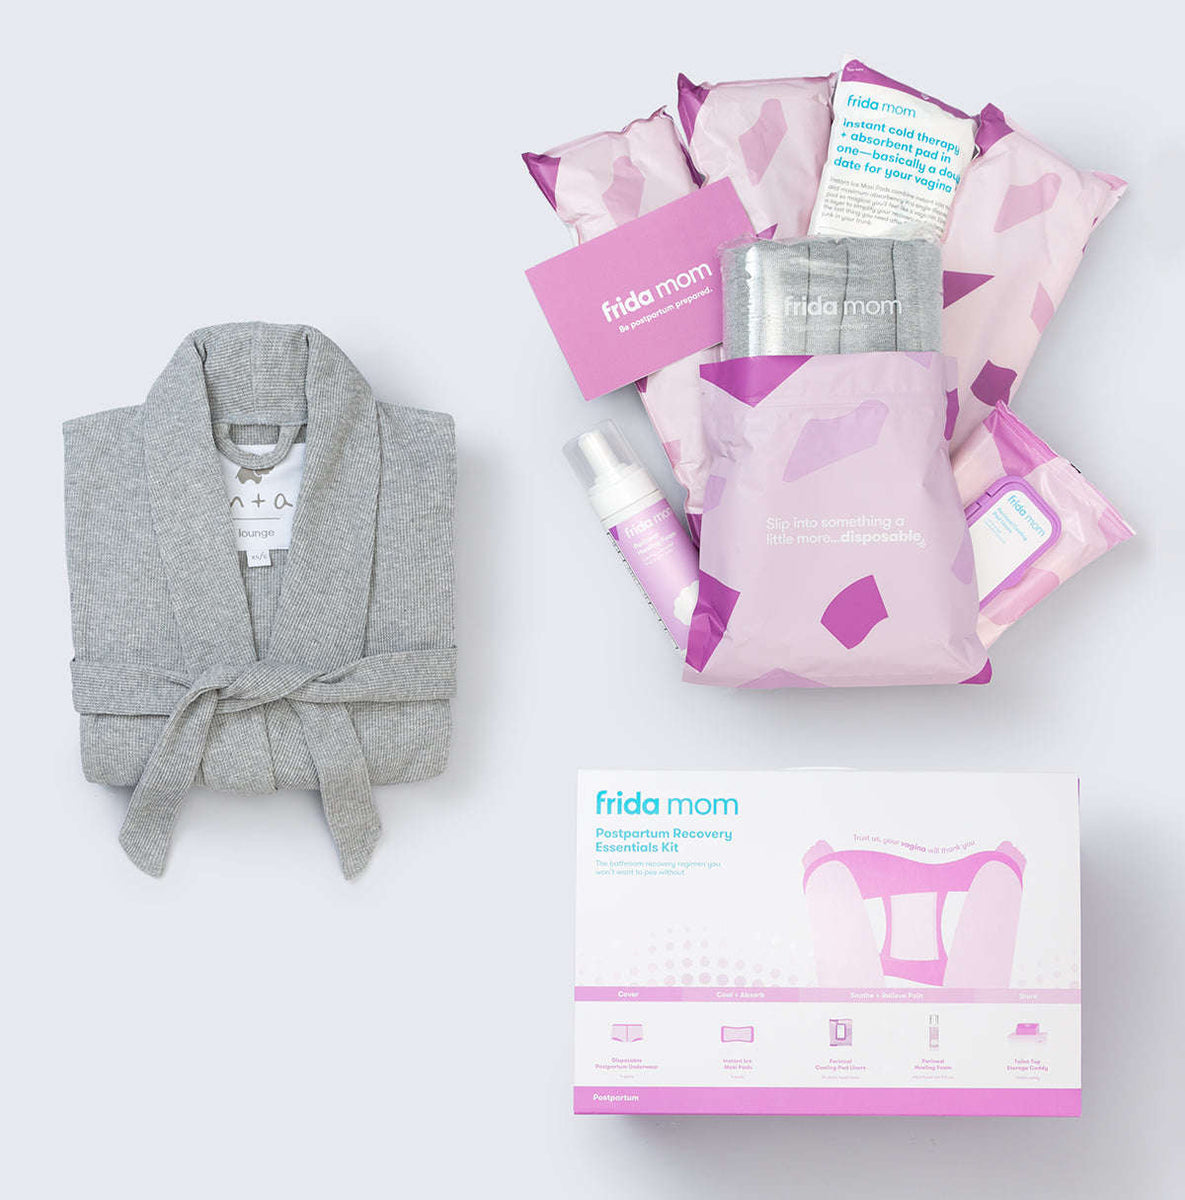 Monica + Andy - Frida Mom Postpartum Recovery Essentials Kit